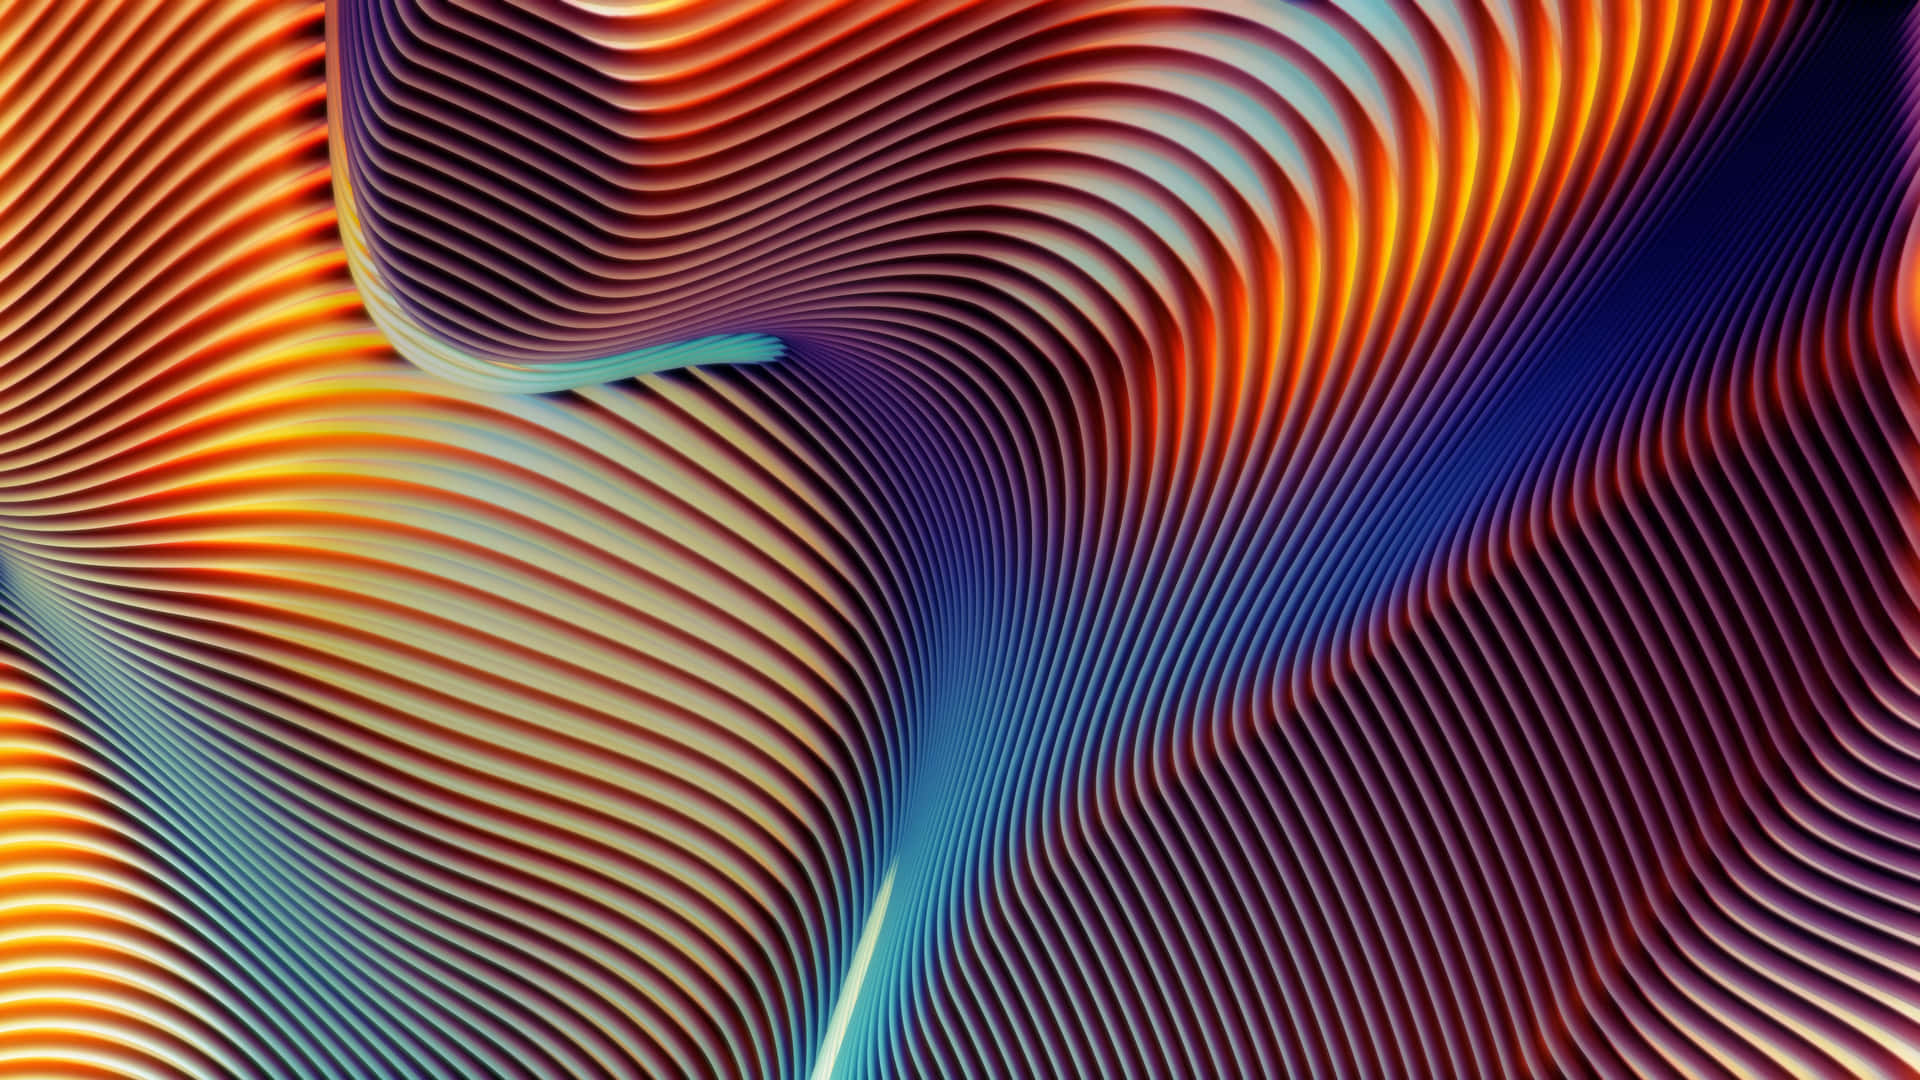 Einbuntes Abstraktes Hintergrundbild Mit Wellenförmigen Linien. Wallpaper